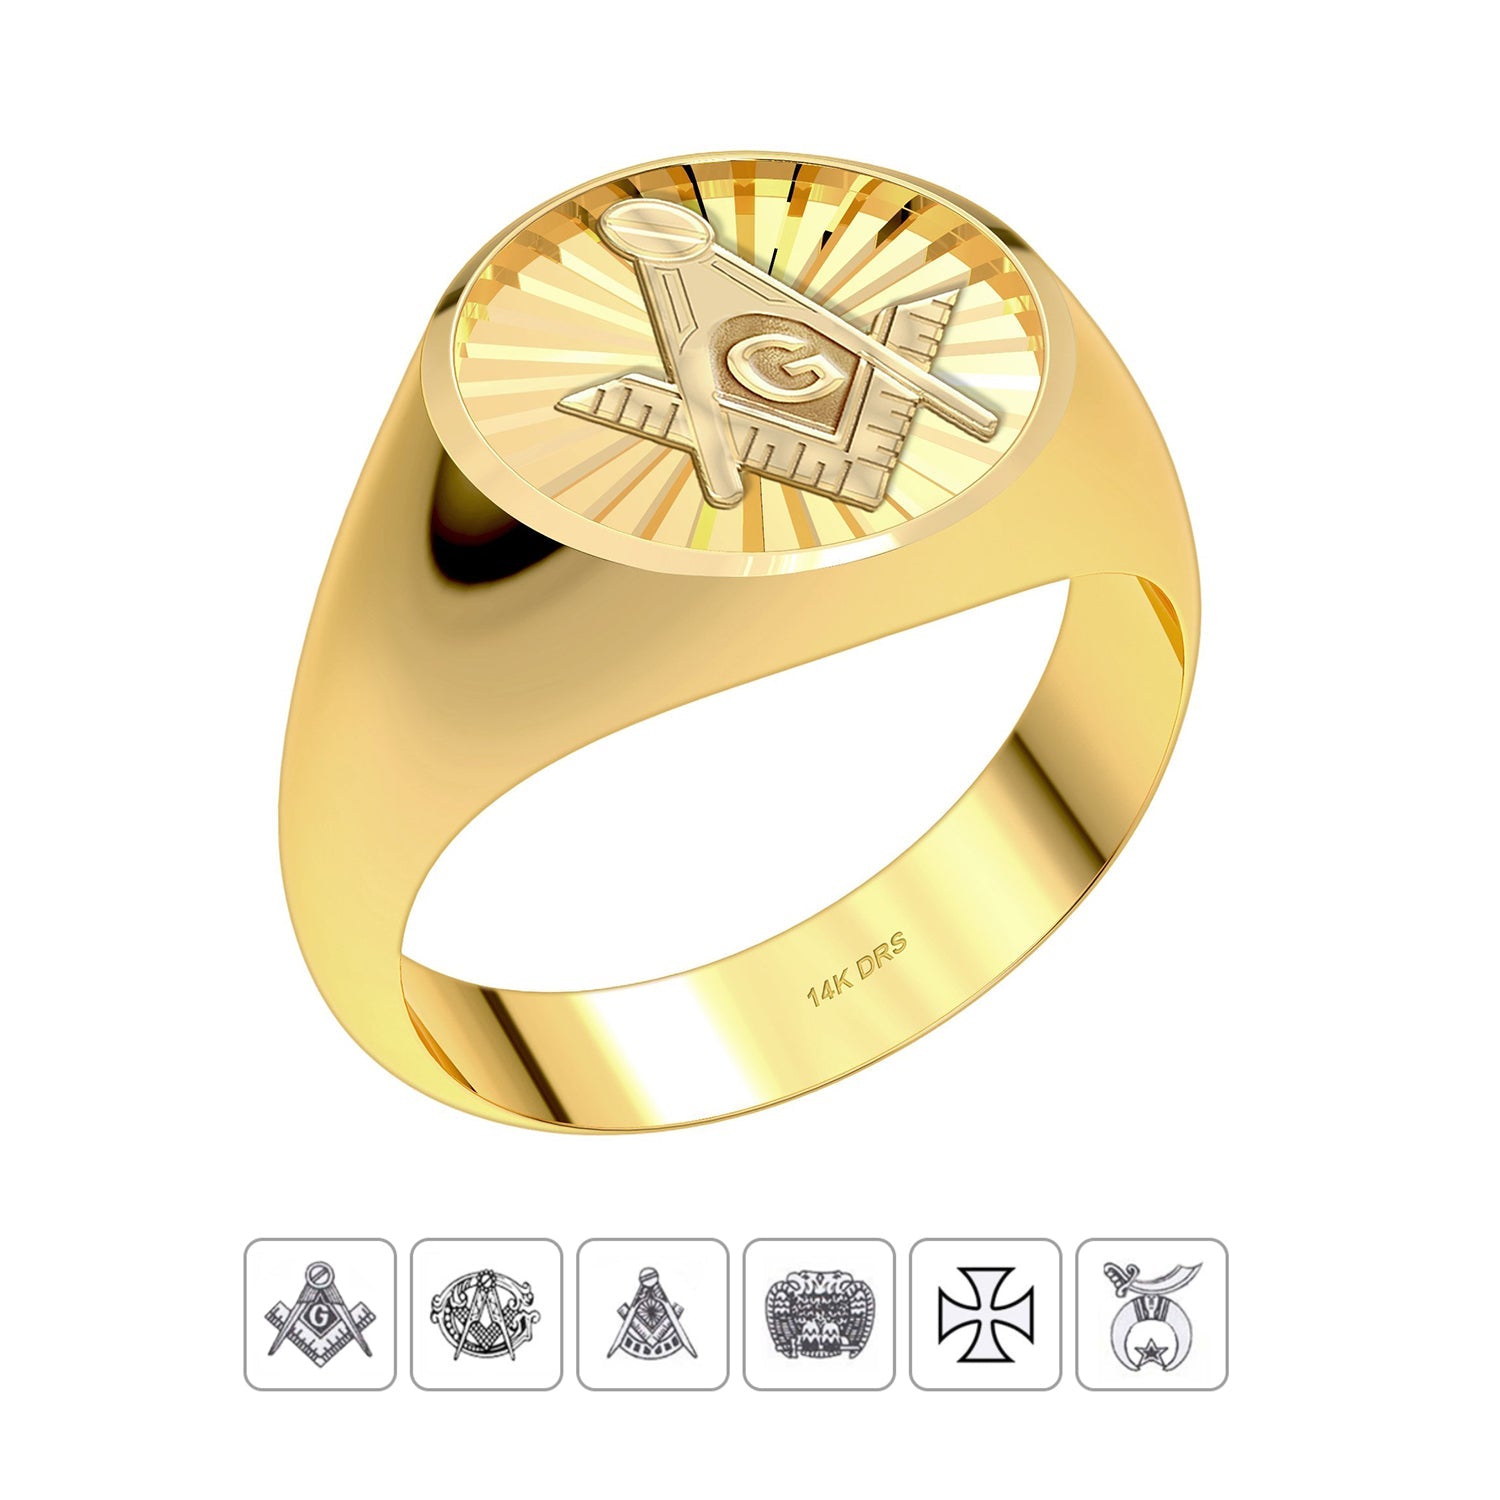 Customizable Men's 10k or 14k White or Yellow Gold Masonic Ring - US Jewels